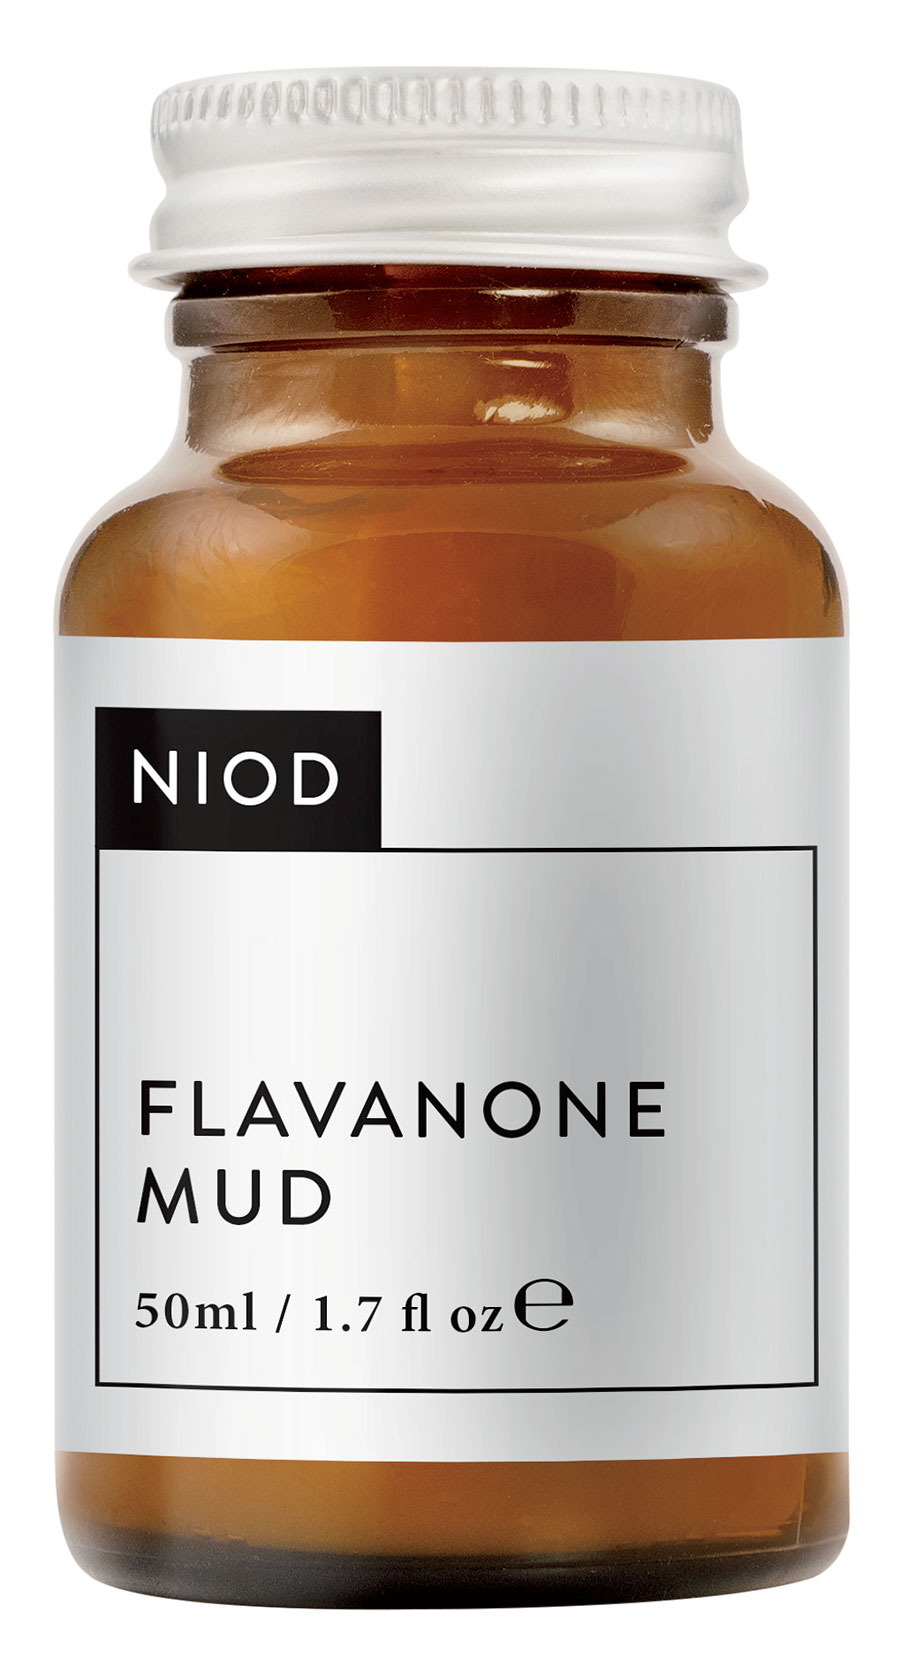 NIOD Flavanone Mud